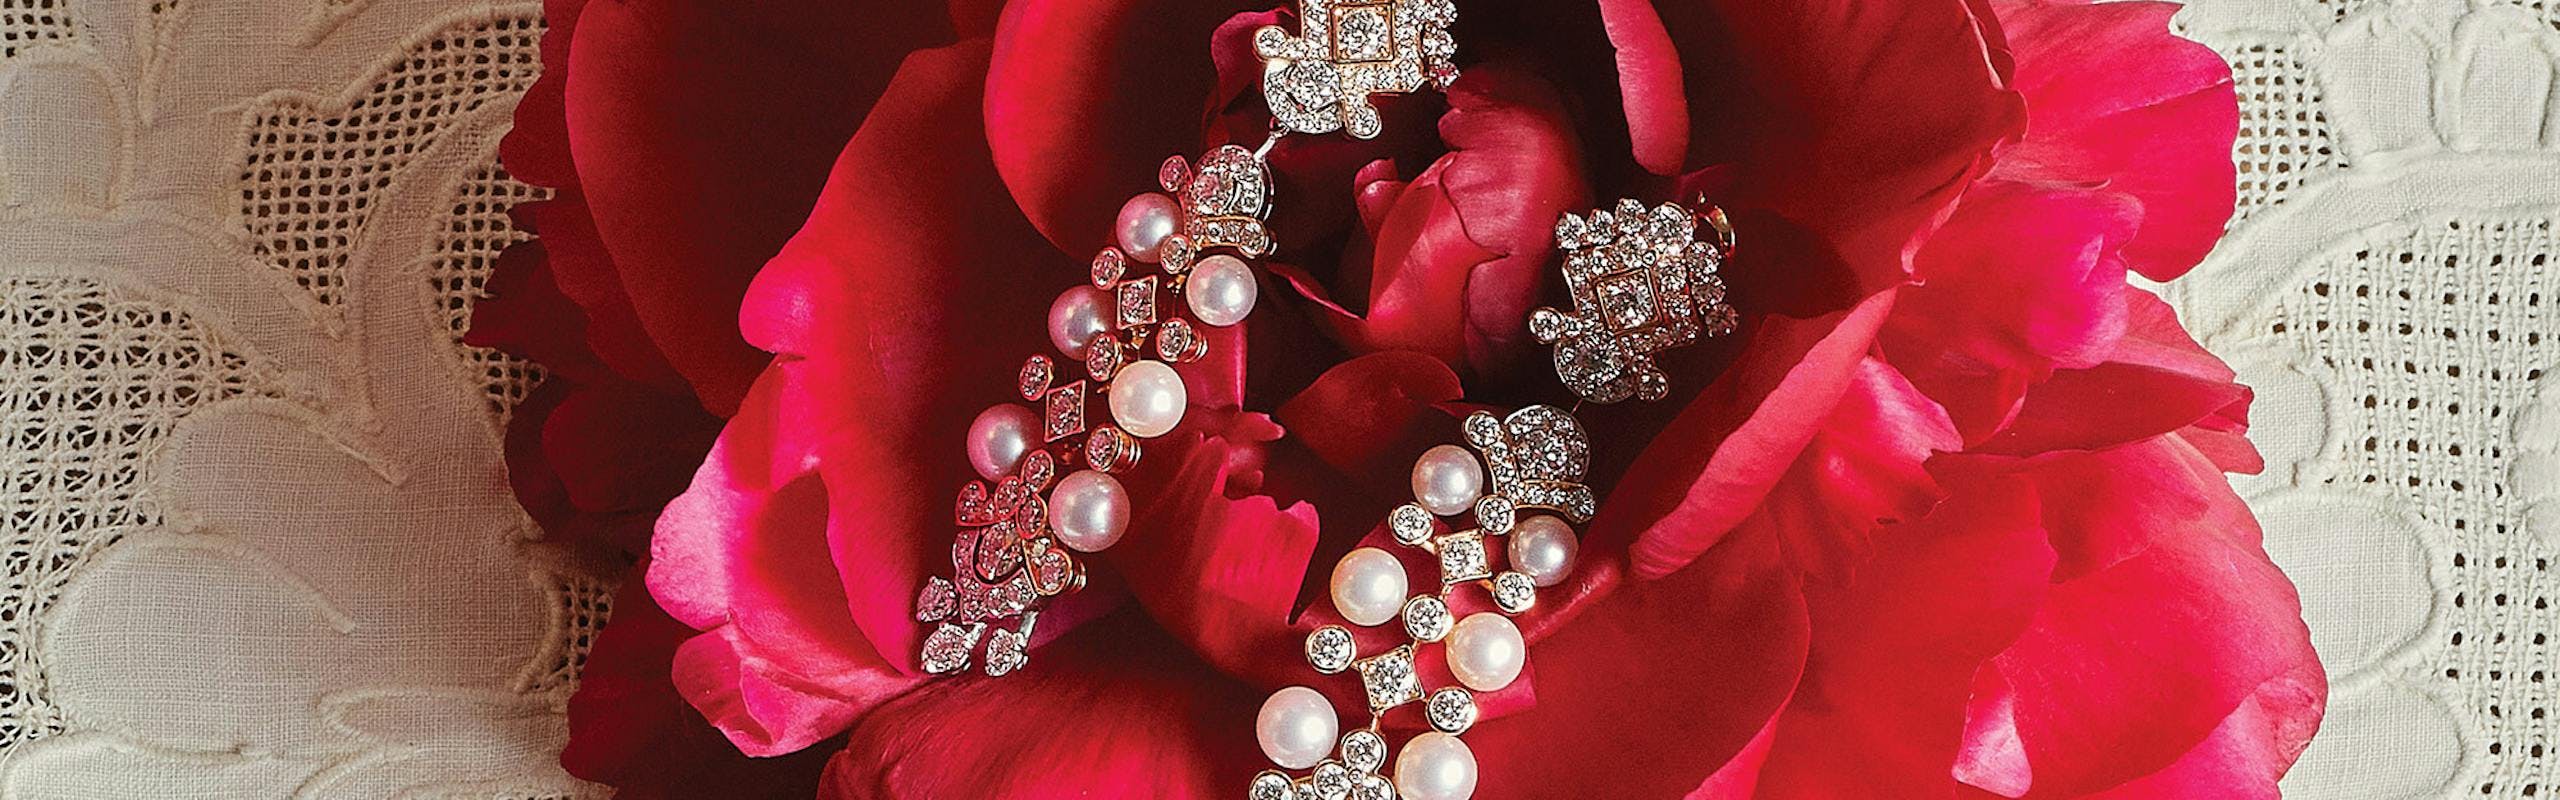 pearl and diamond earrings on rose